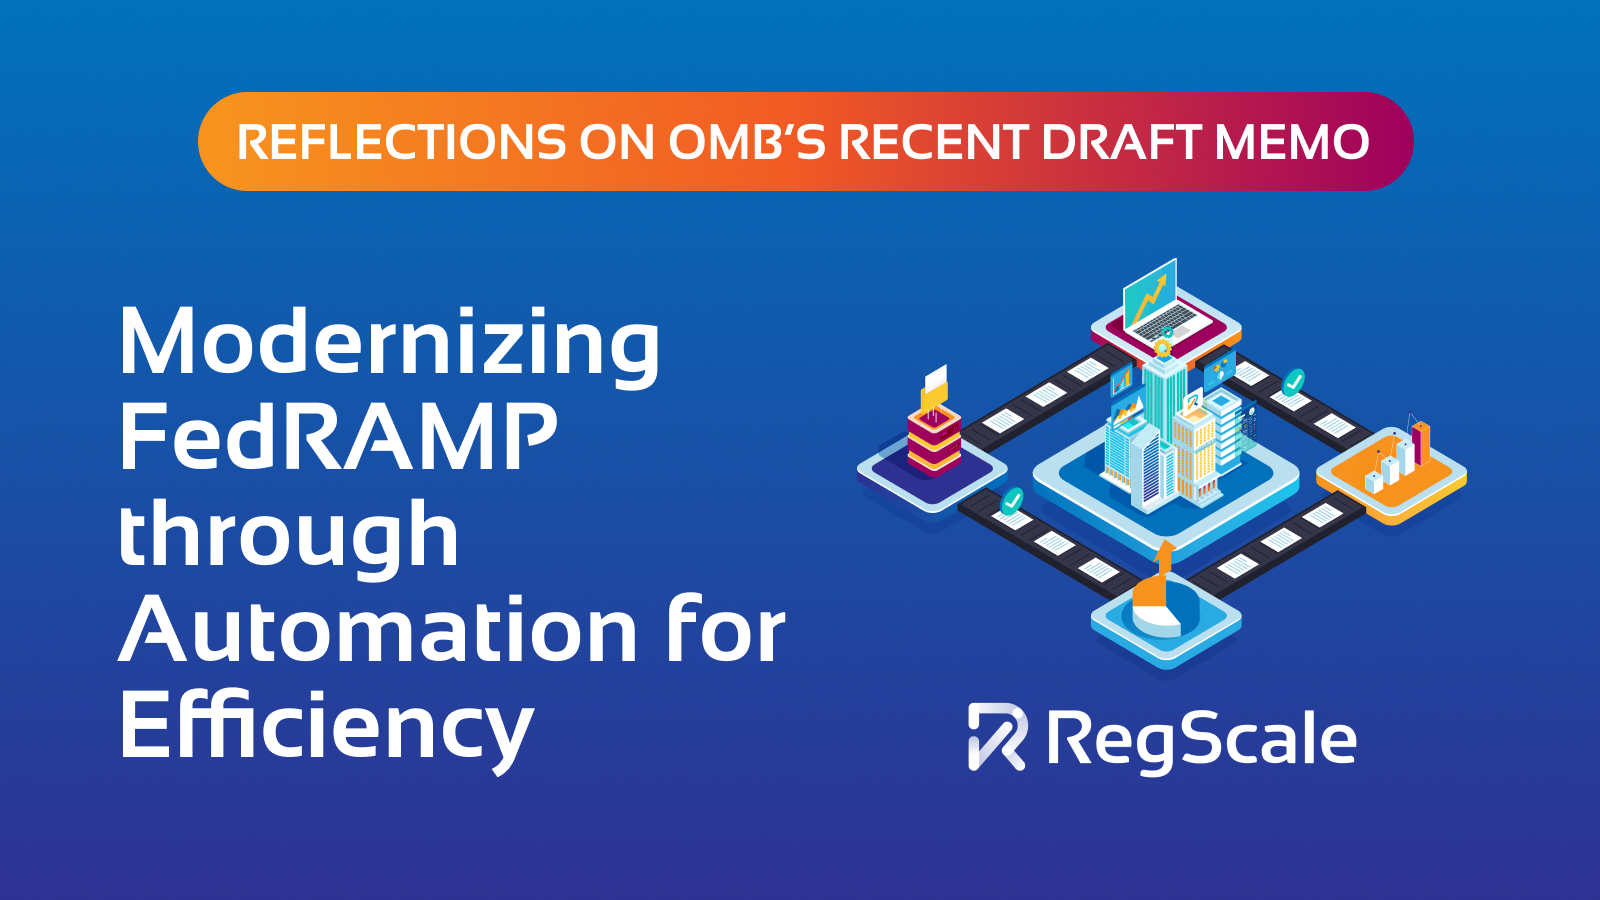 Modernizing FedRAMP through Automation for Efficiency: Reflections on OMB’s Recent Draft Memorandum